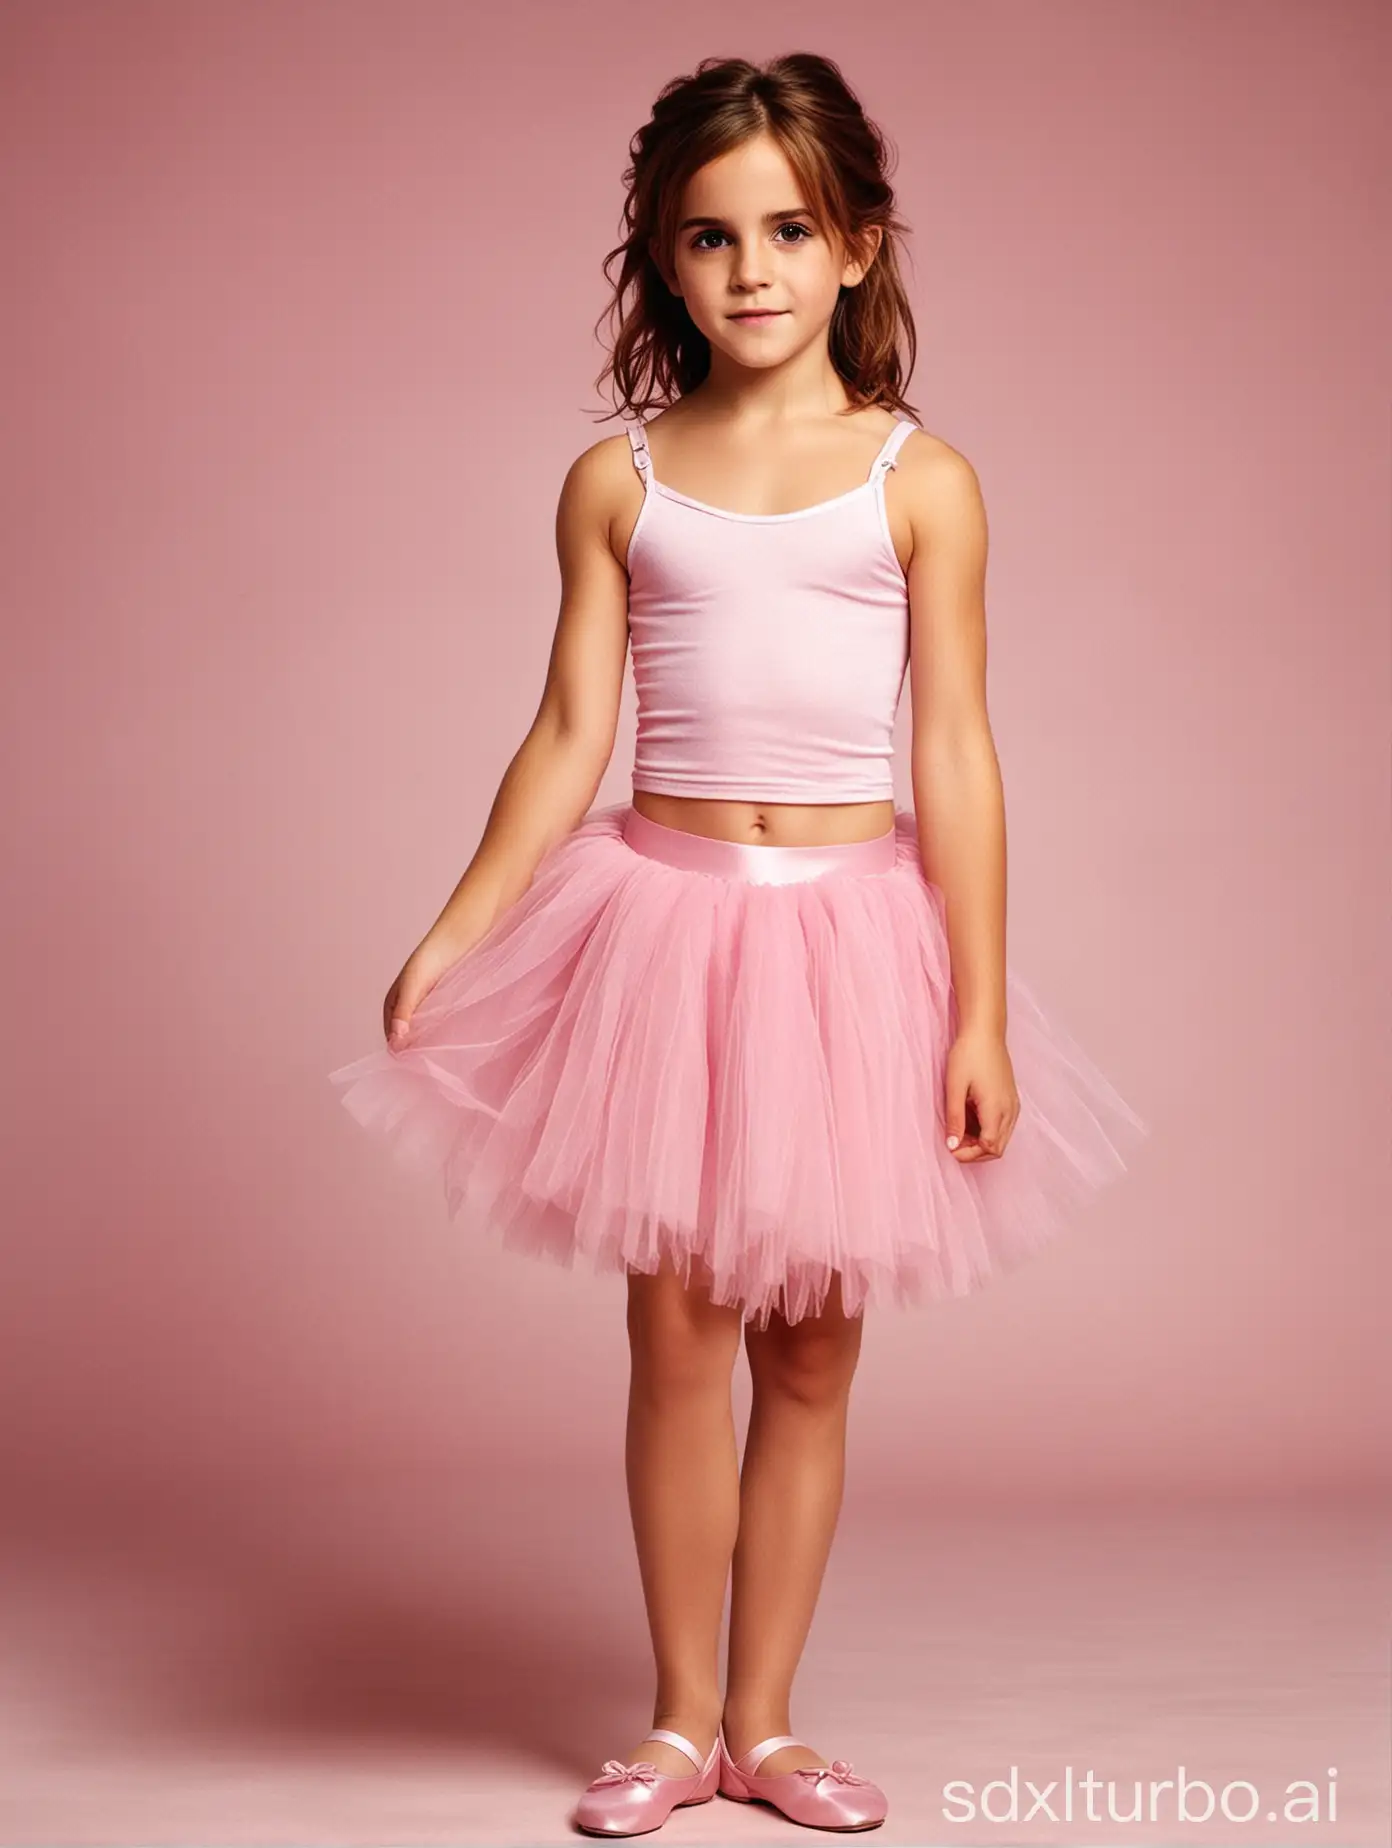 Emma-Watson-Childhood-Portrait-Muscular-Abs-Pink-Ballerina-Tutu-Skirt